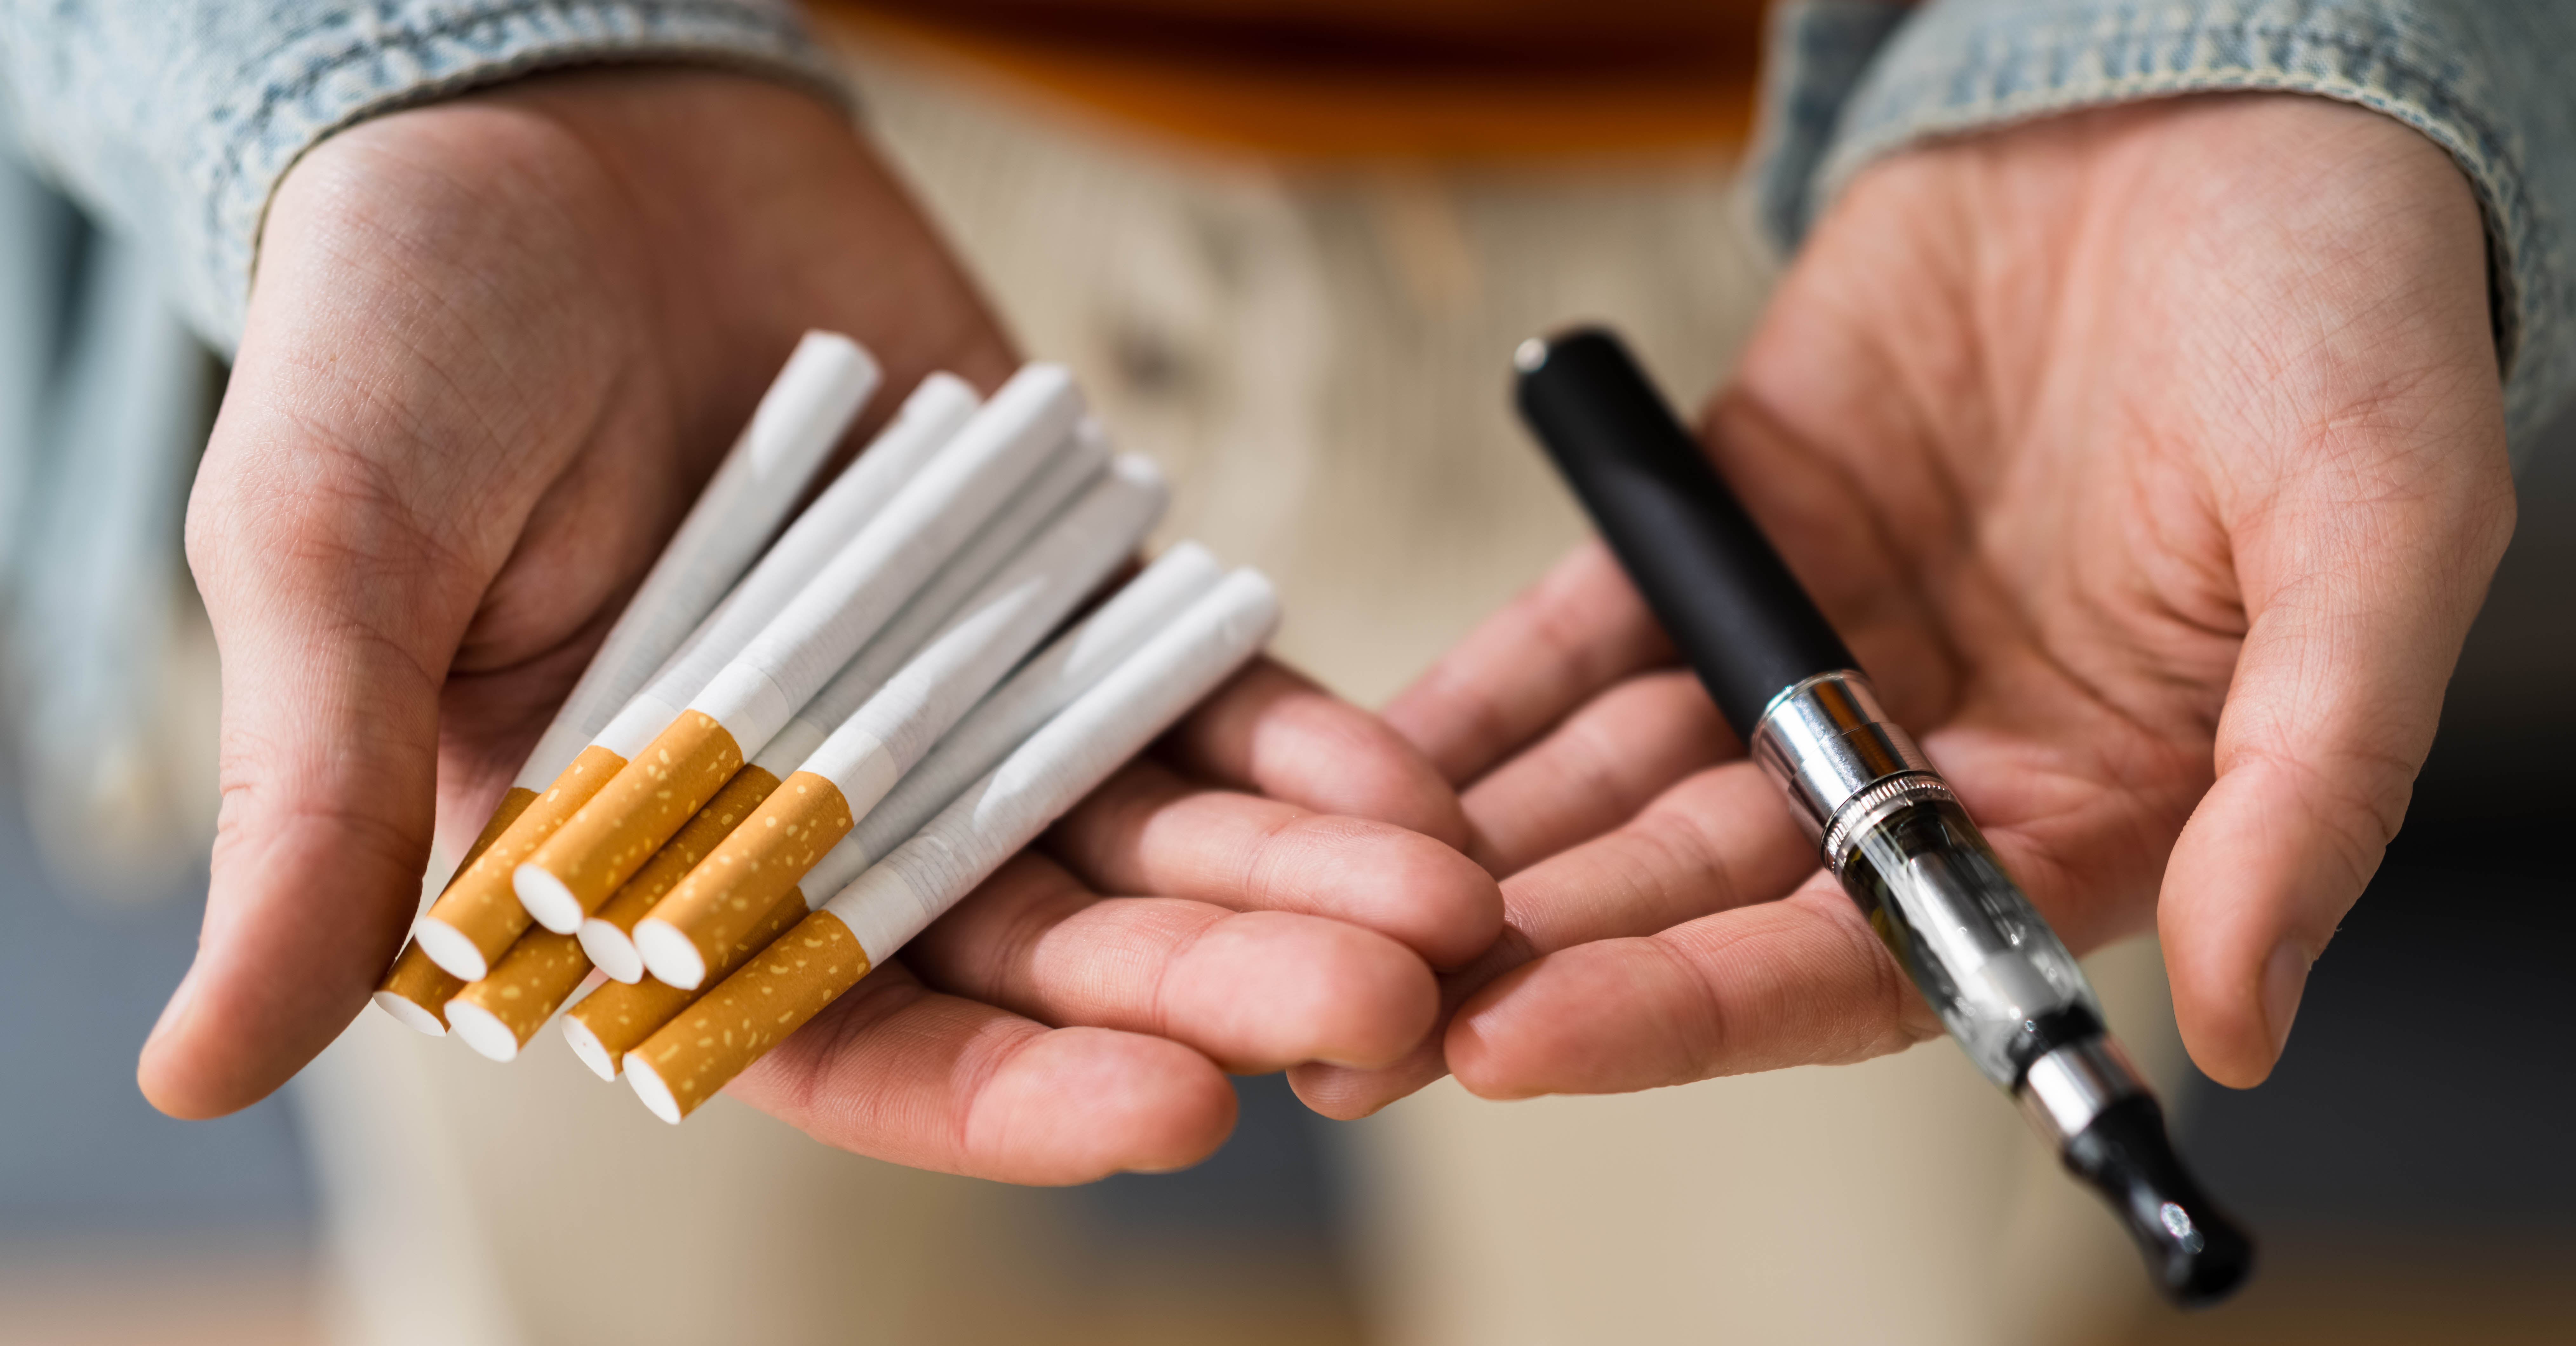 Researchers: Rethink e-cigarettes' role in treating cigarette smokers' nicotine addiction